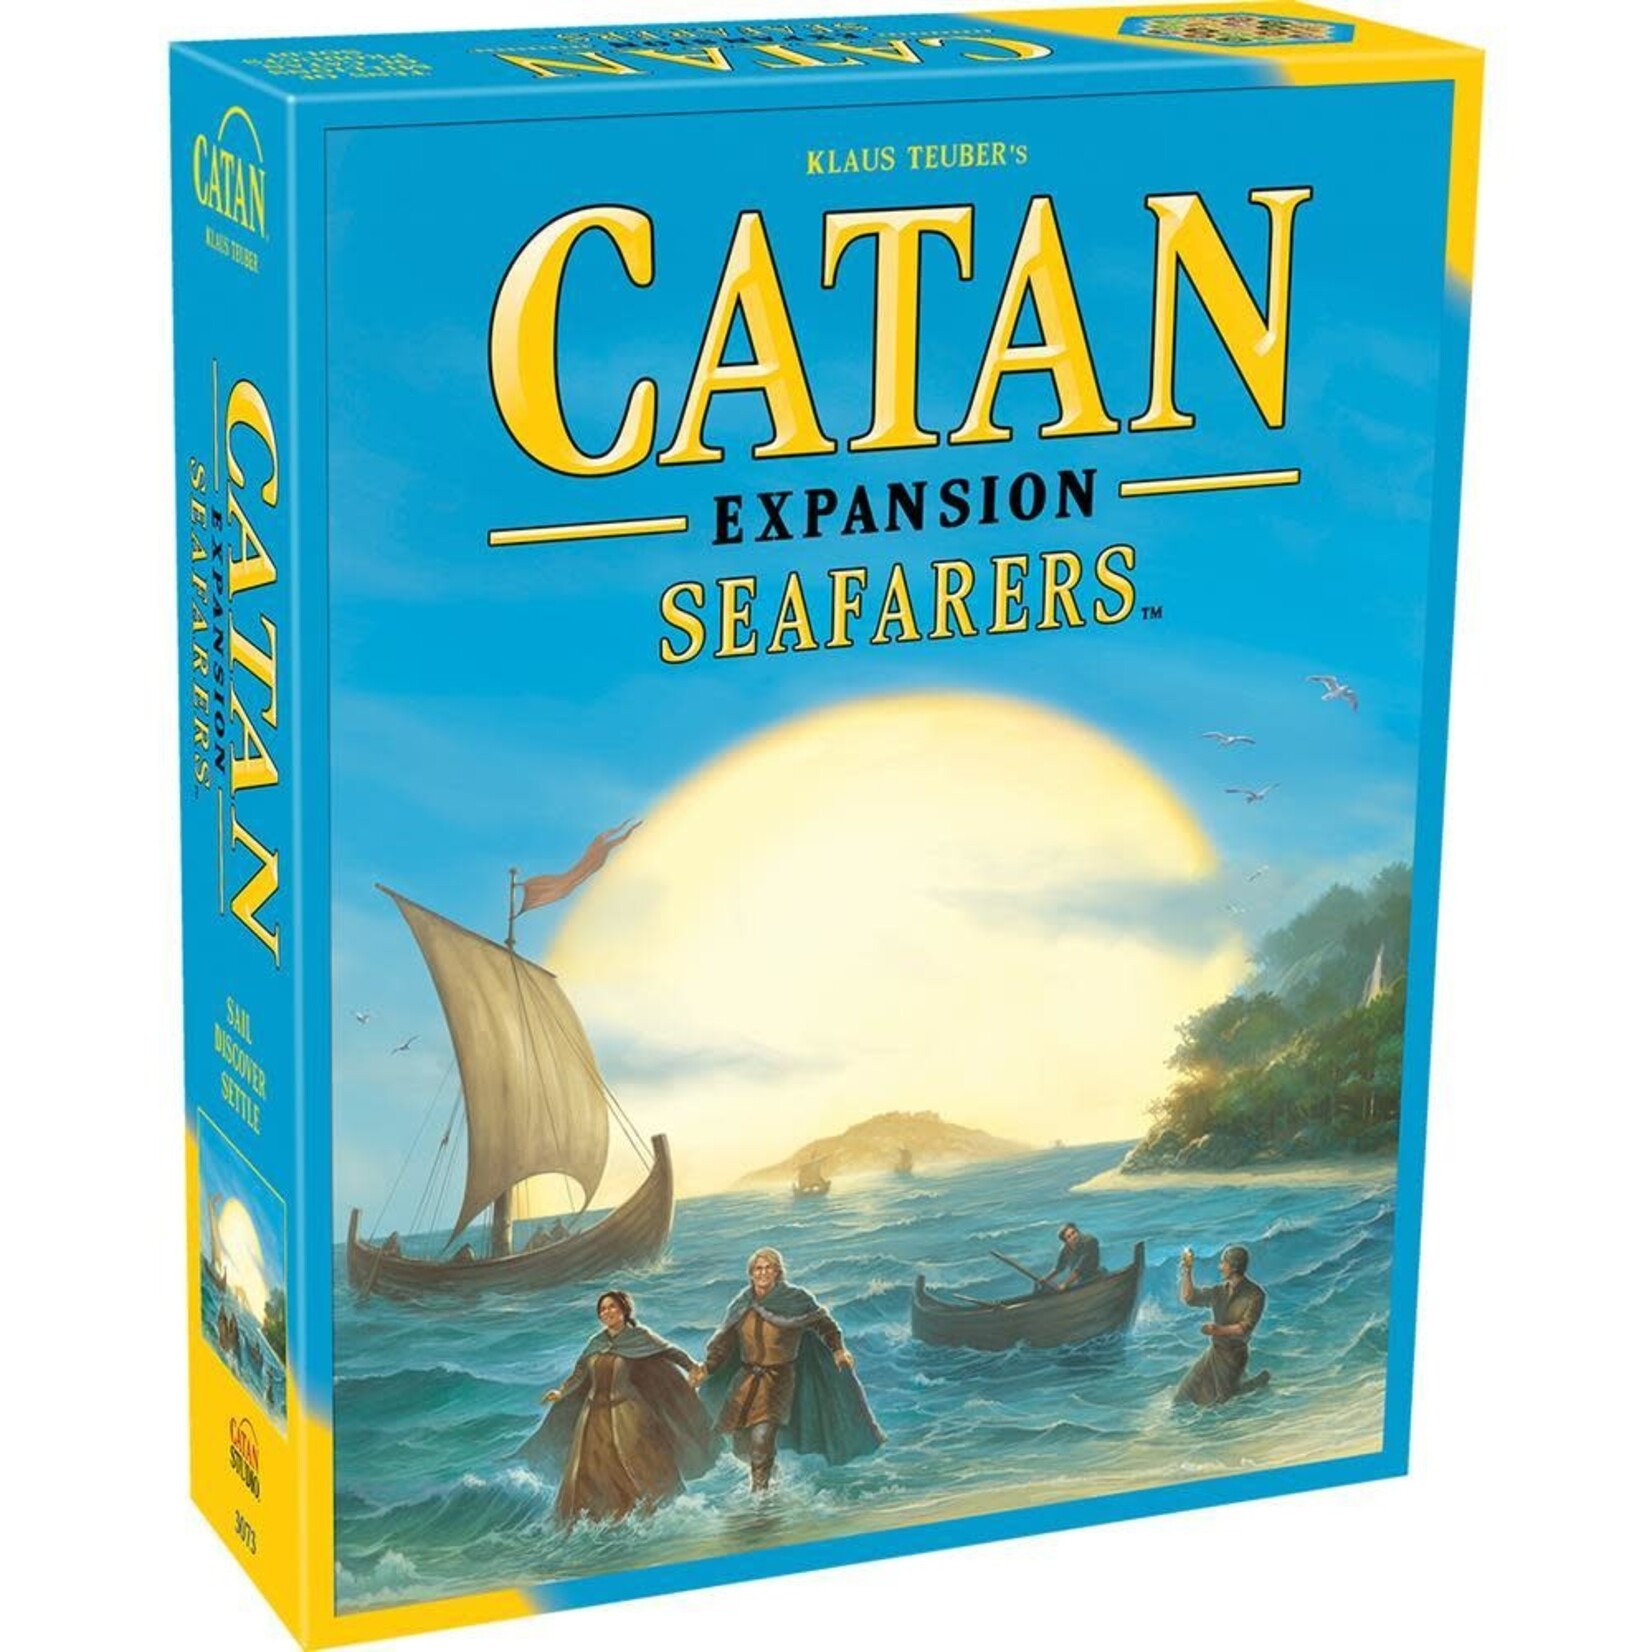 Catan Studios Catan: Explorers & Pirates Expansion